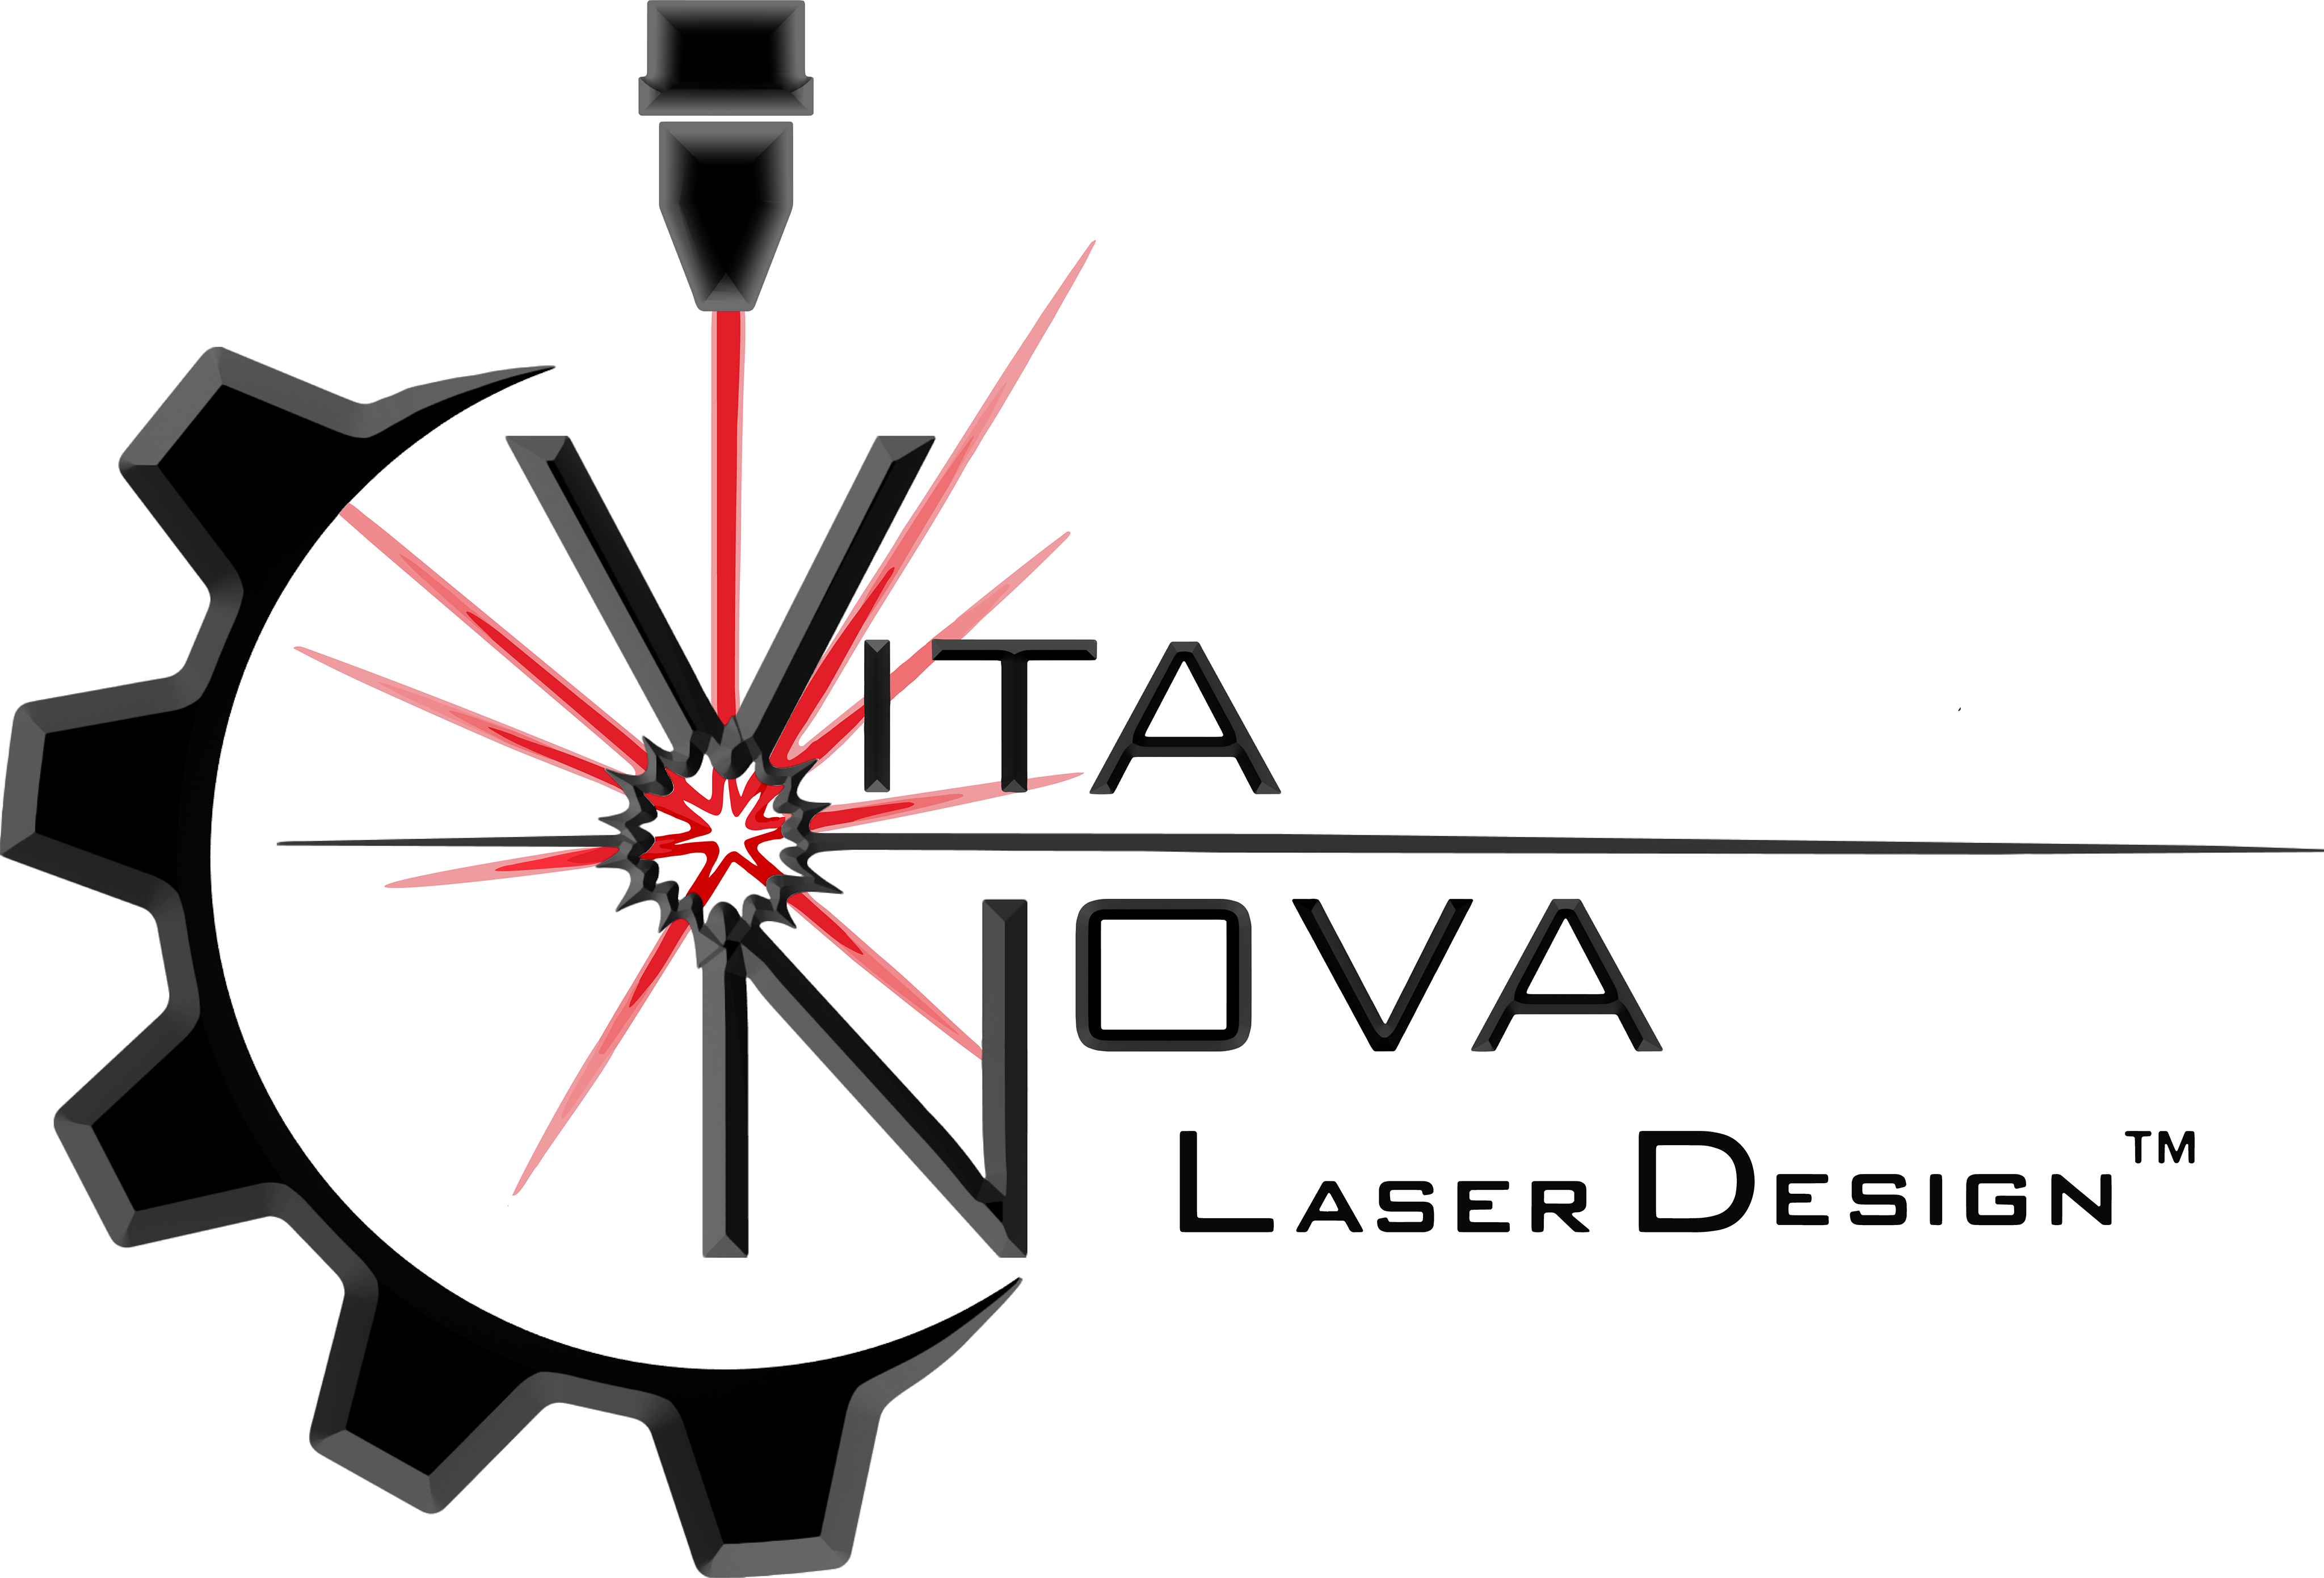 Vita Nova | Laser Design - Home